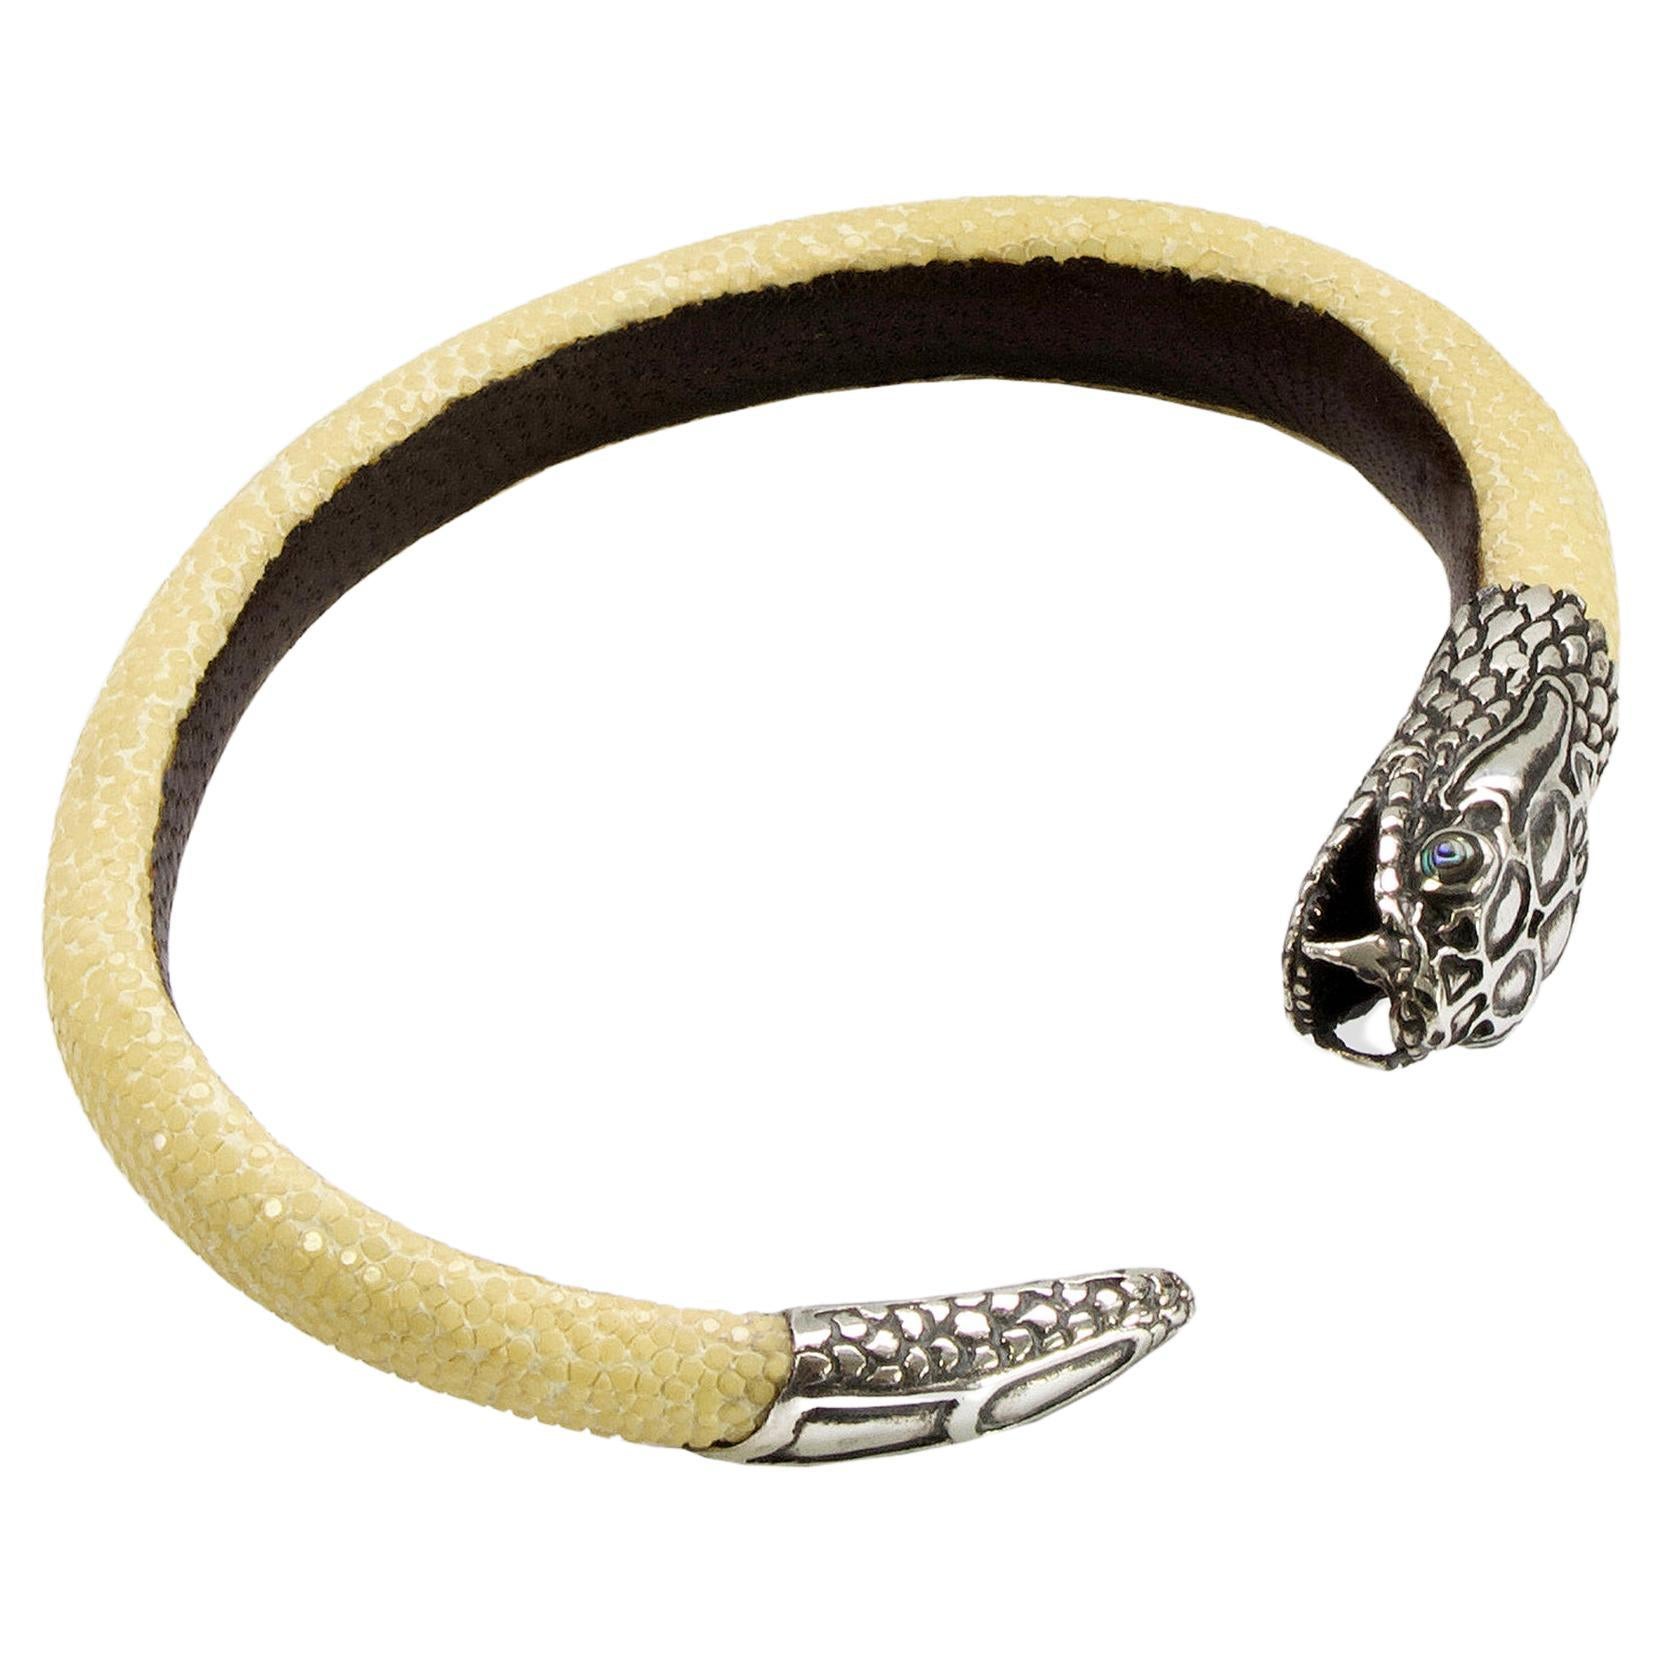 Lou Guerin Bracelet - Silver Snake Head Detail - Adjustable Leather Outer For Sale